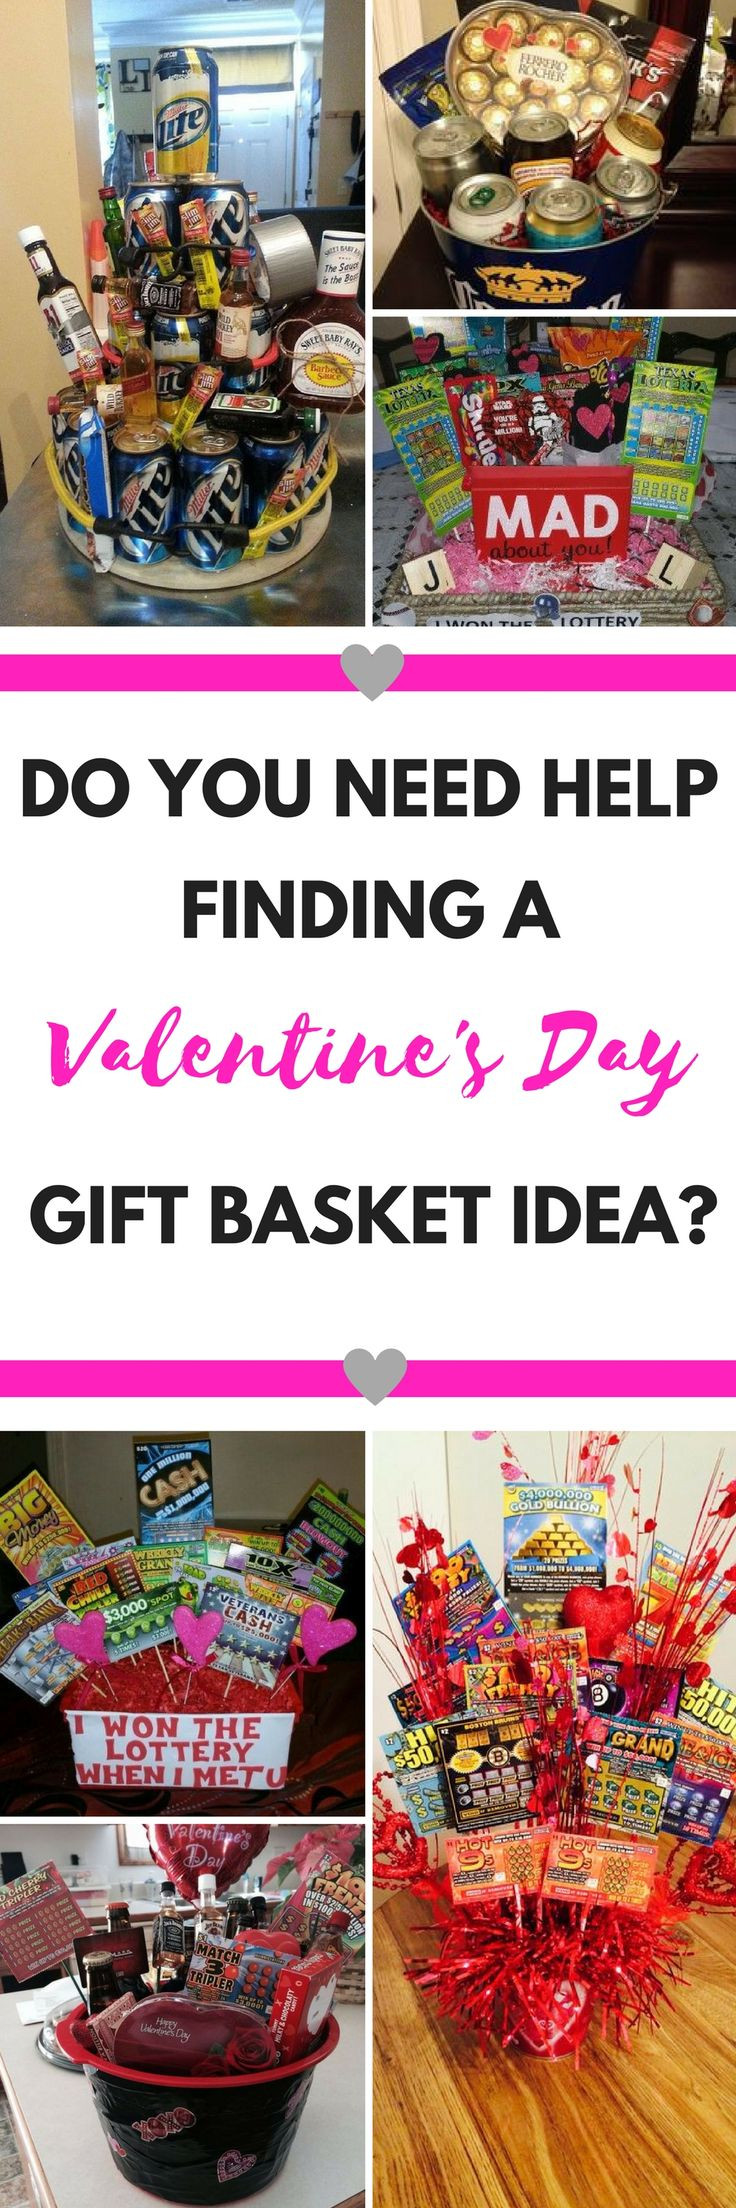 Best ideas about Valentine'S Day Gift Basket Ideas
. Save or Pin Best 25 Valentine s day t baskets ideas on Pinterest Now.